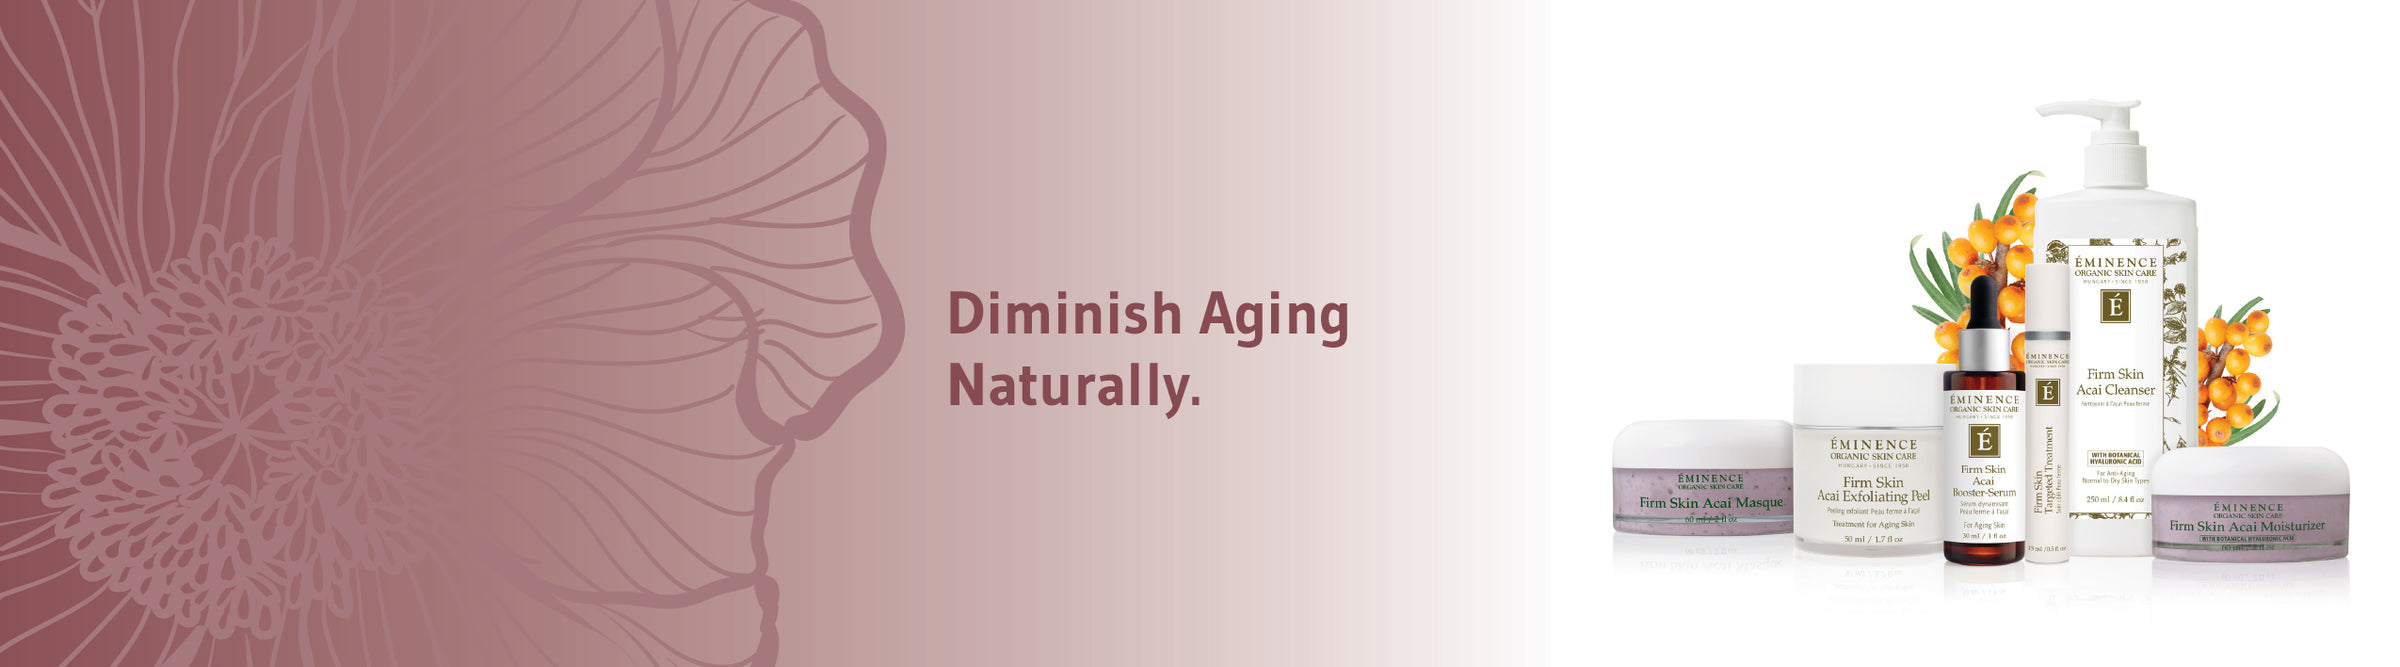 Eminence Organics - Firm Skin VitaSkin